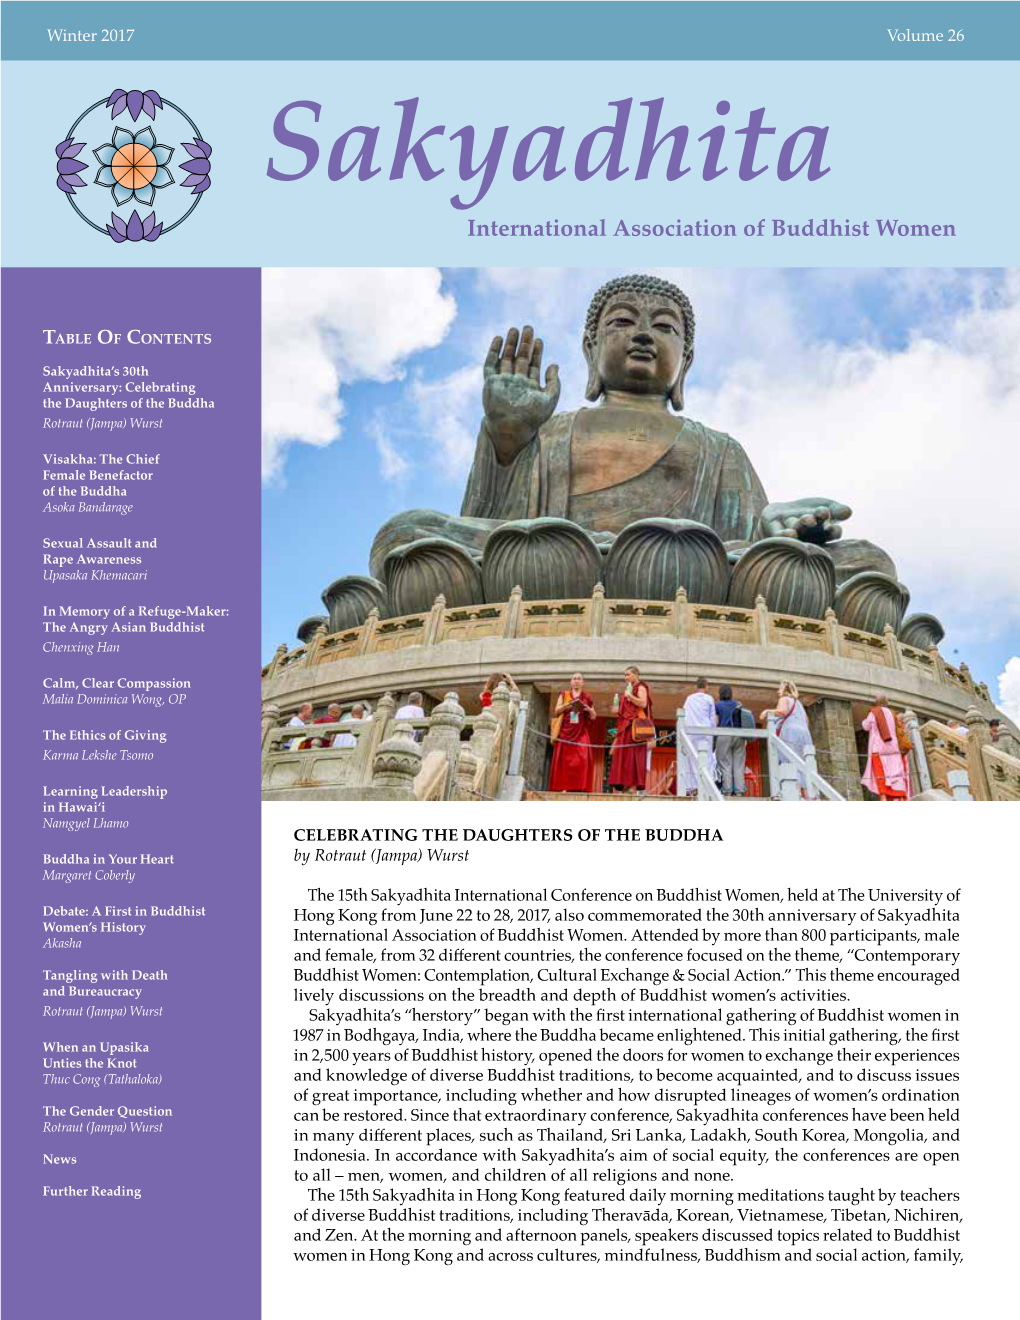 2017 Sakyadhita News